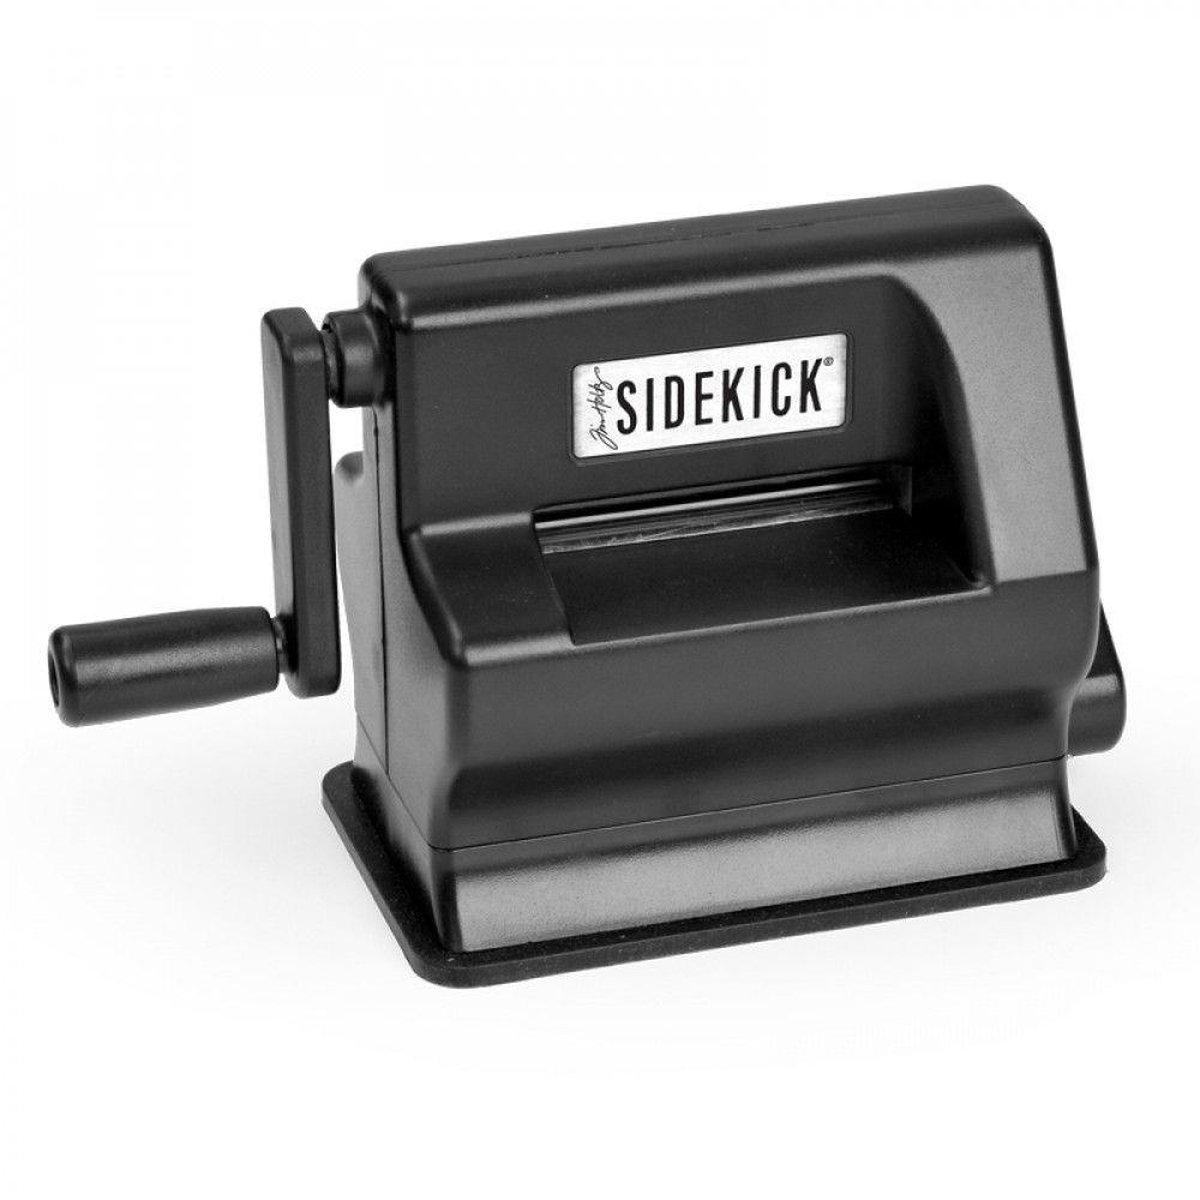 Sizzix Sidekick - Mini máquina troqueladora y estampadora - Negro